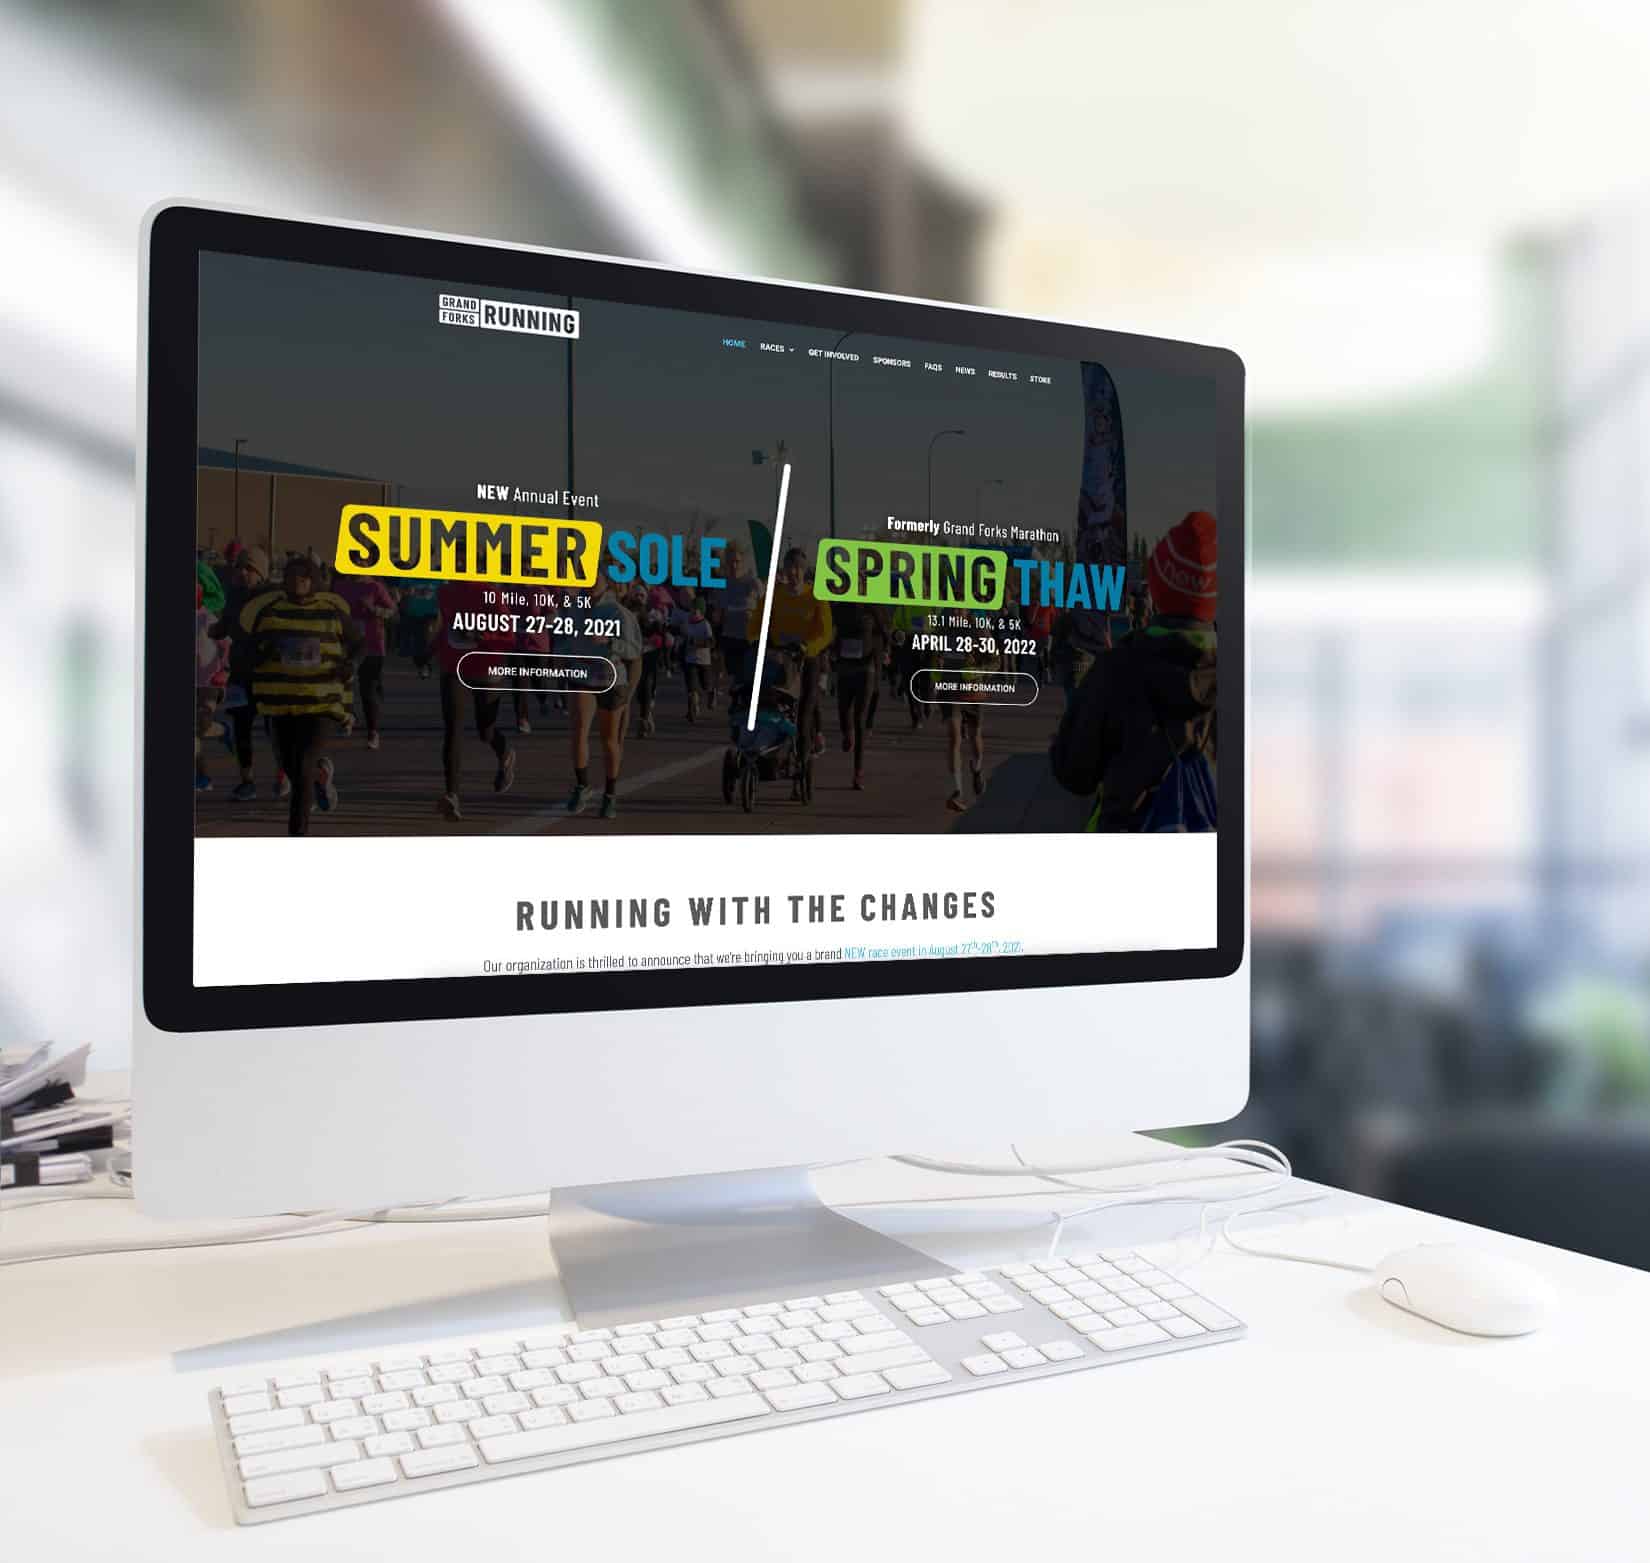 A website designed for Grand Forks Marathon shown on the screen of a desktop computer.